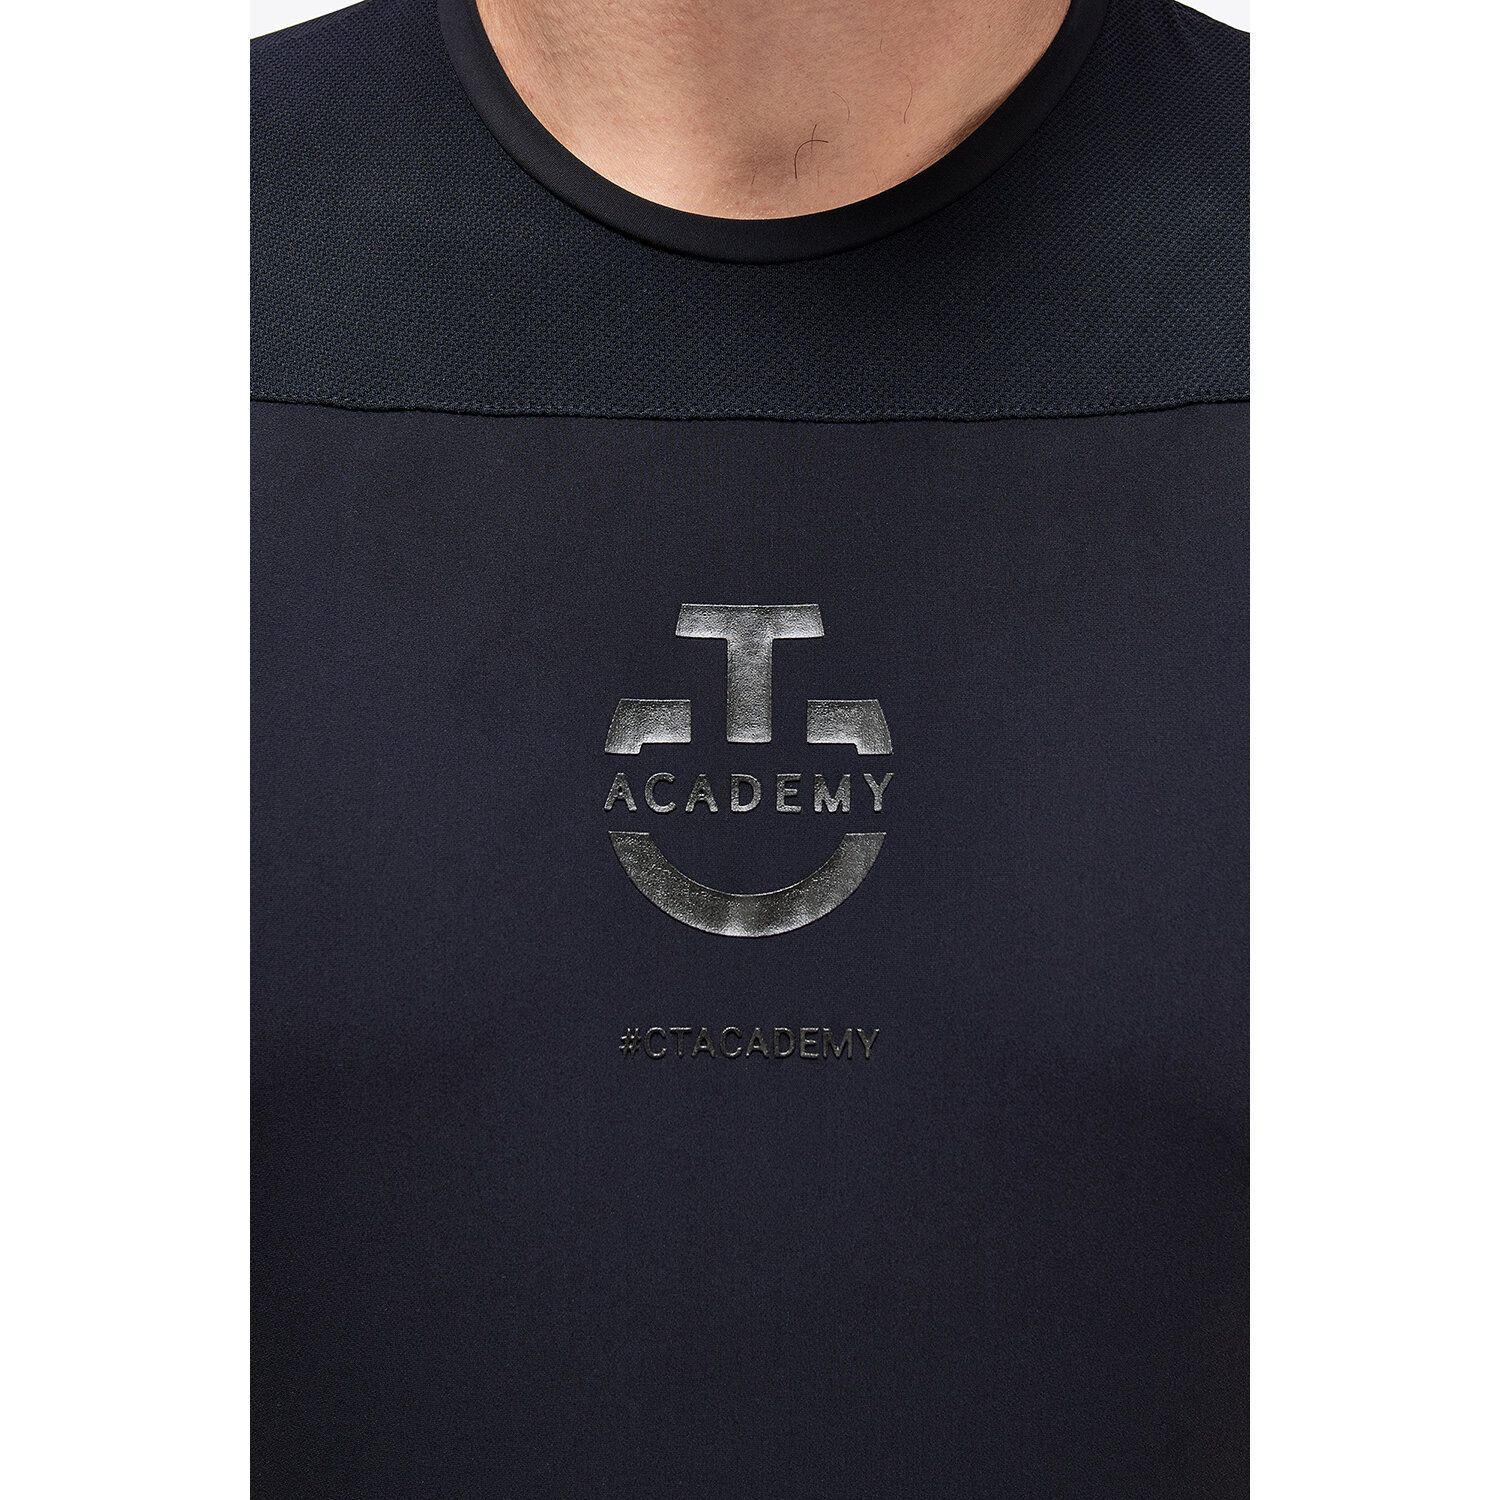 Cavalleria Toscana Men's CT Academy Jersey T-Shirt BLACK-4